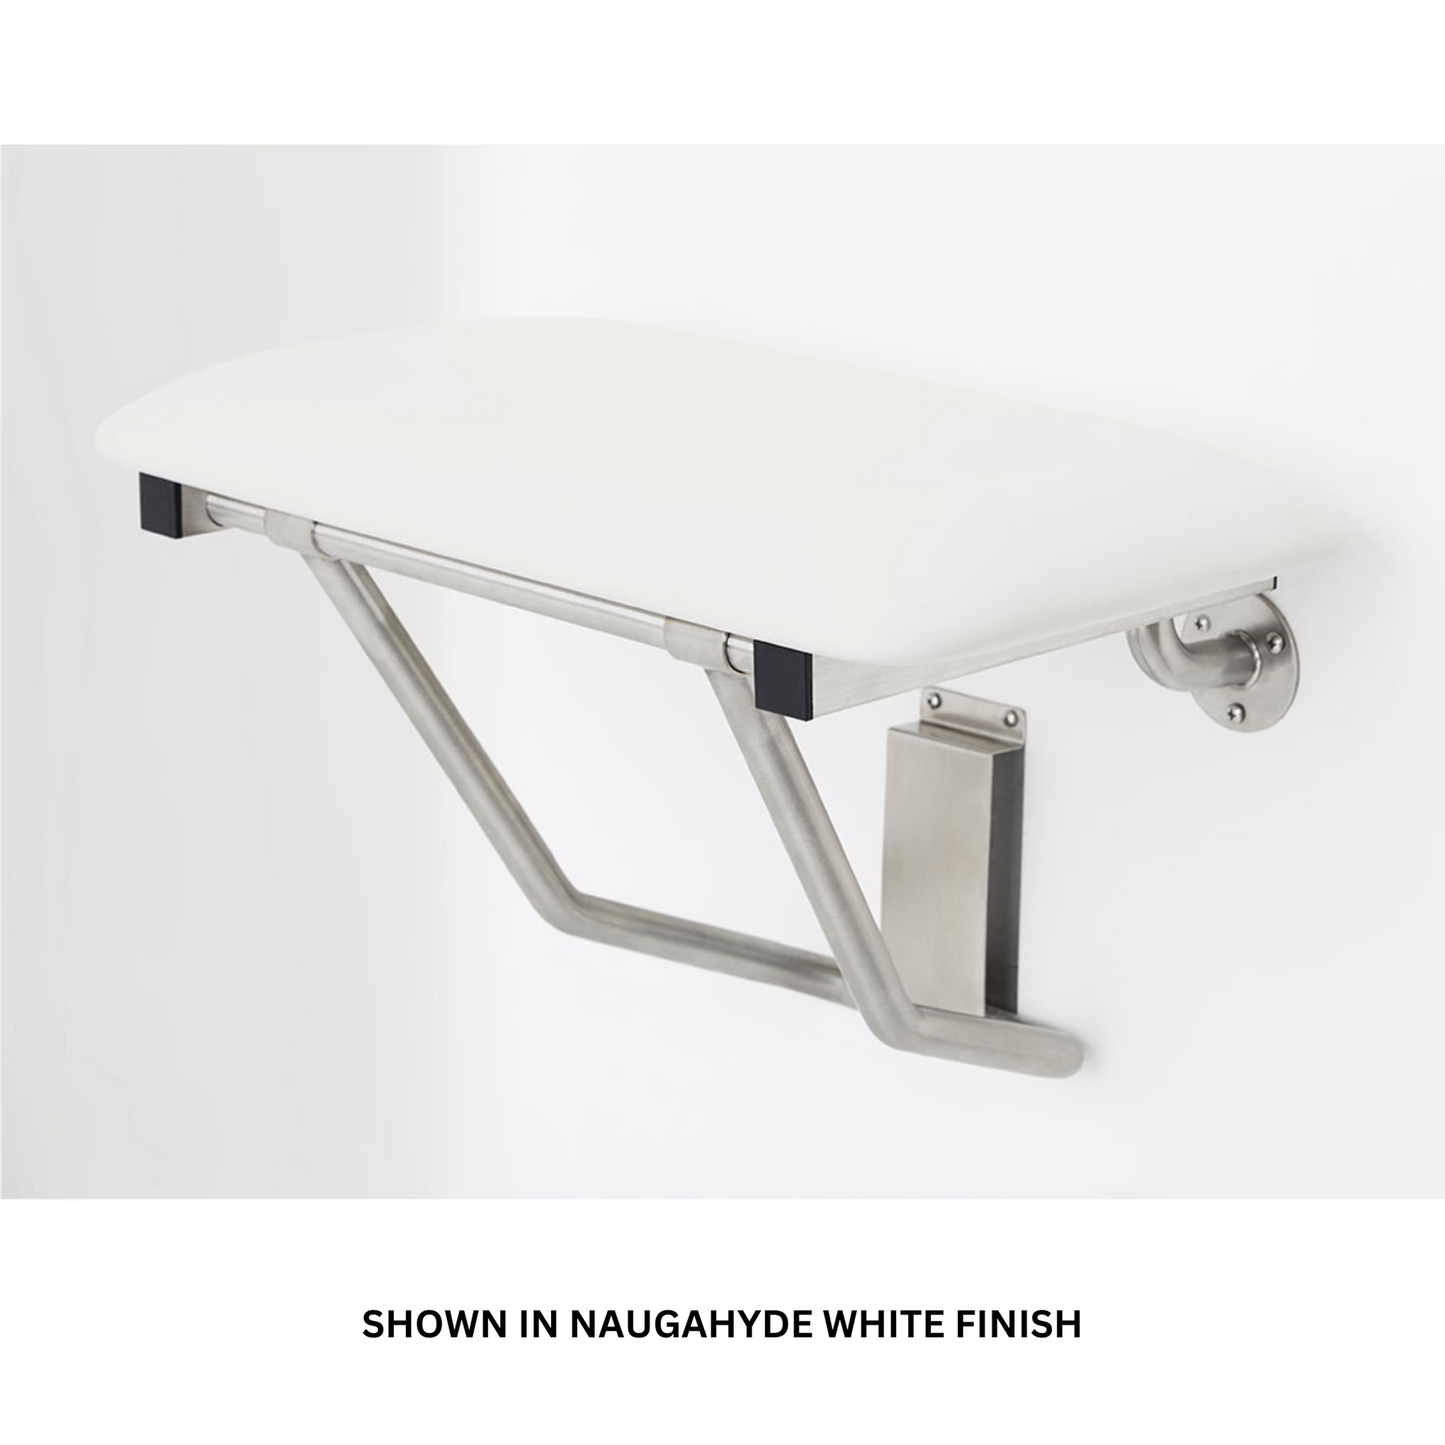 Seachrome Signature Series 28" W x 15" D Naugahyde Almond Cushion Seat Top Folding Wall Mount Bench Shower Seat